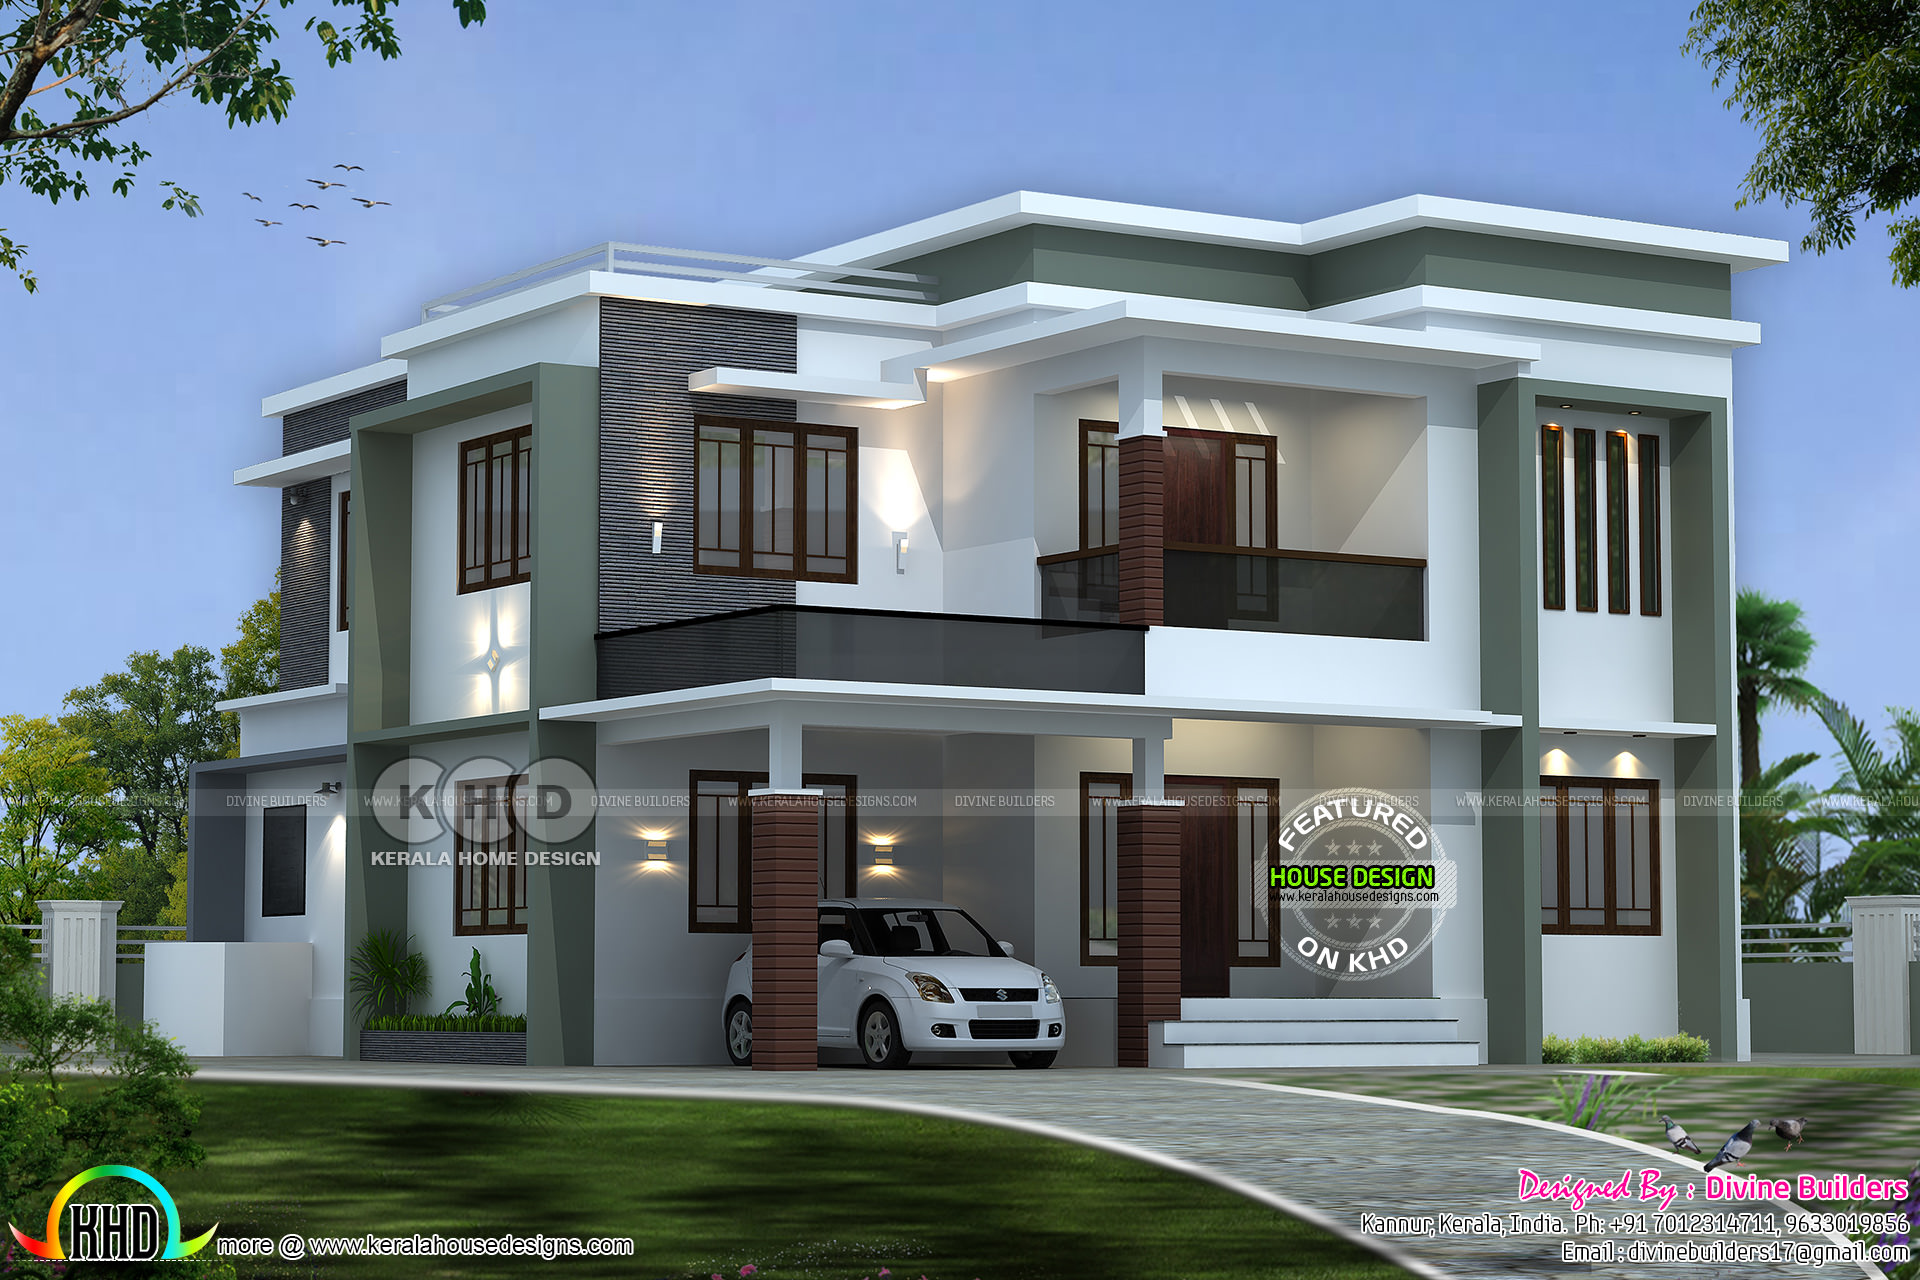 2793 Sq Ft Kerala Home Design